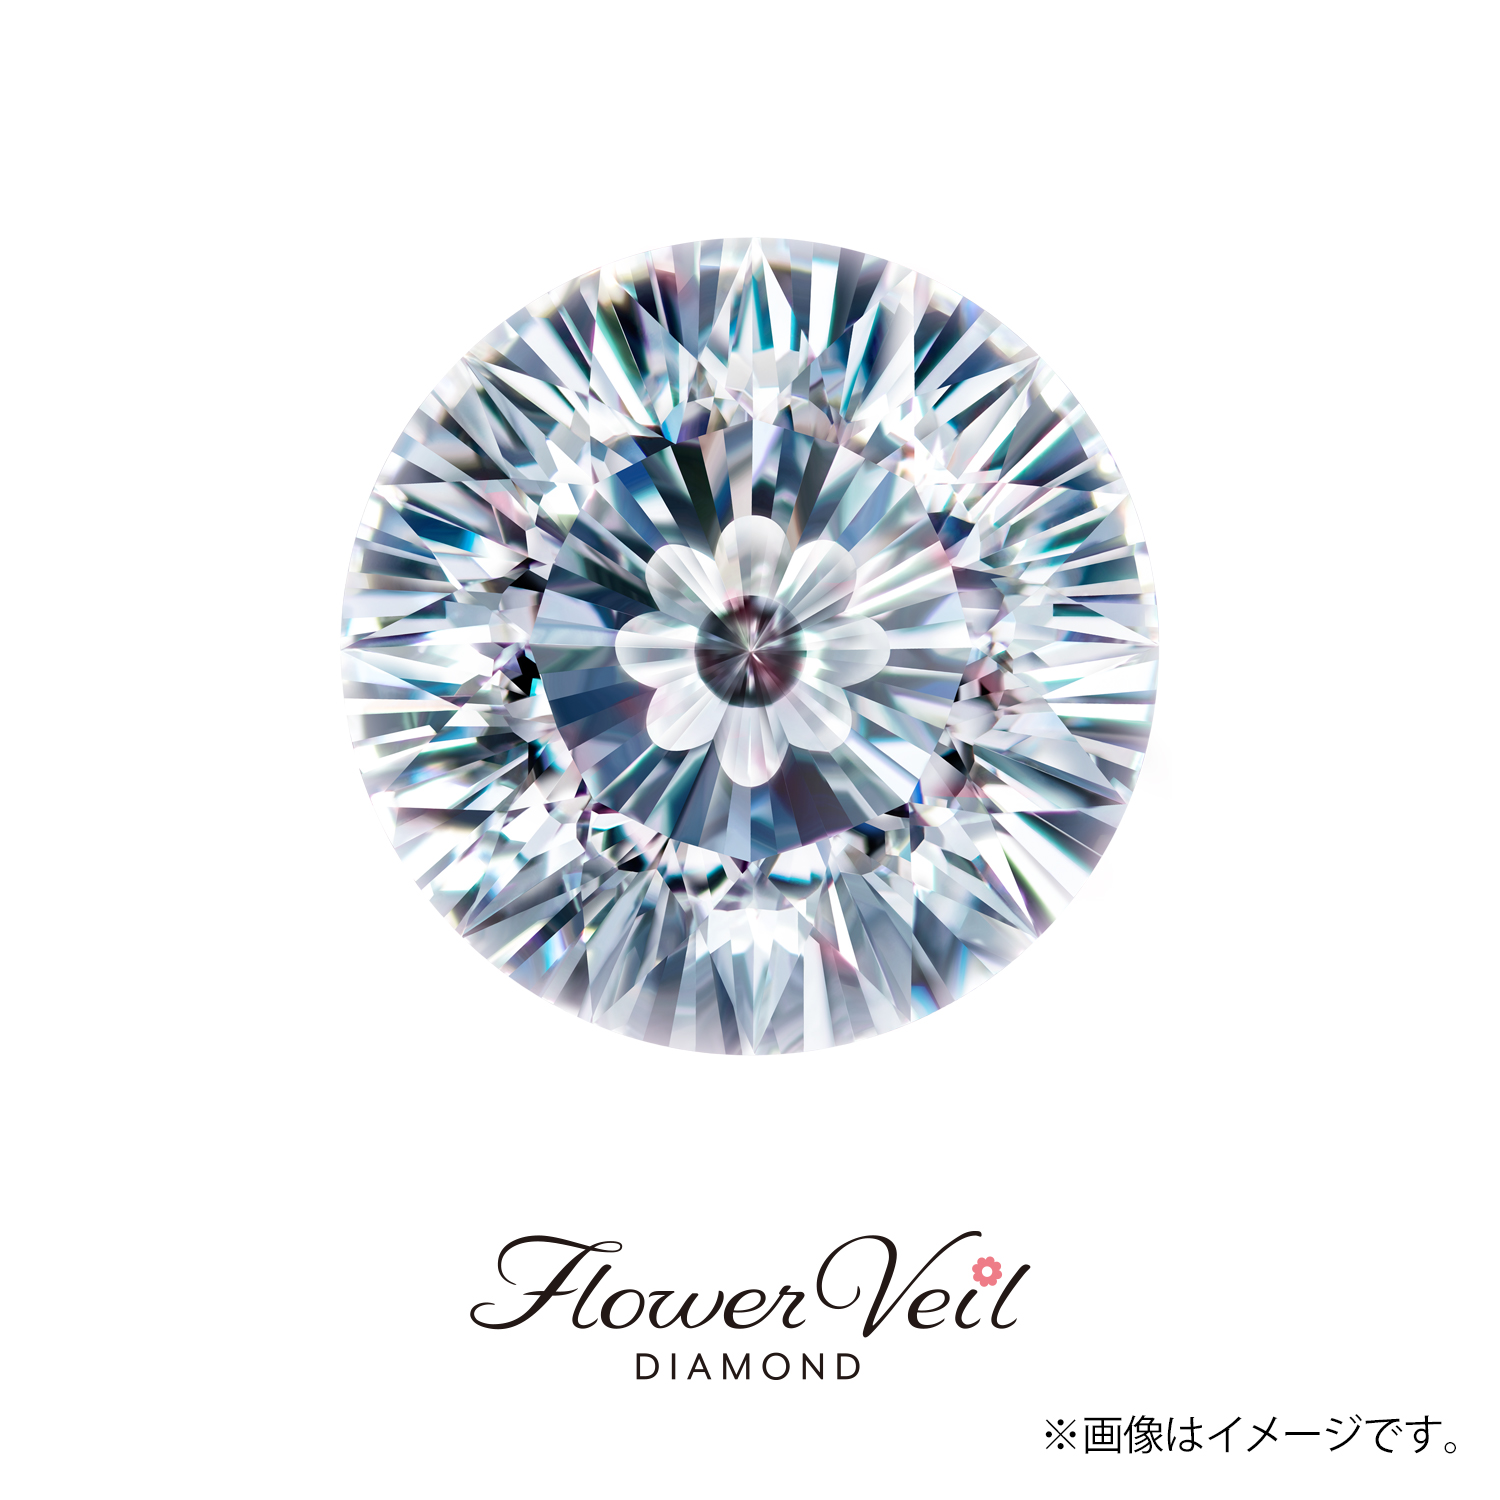 0.210ct Round ダイヤモンド / E / VS2 / FLOWER VEIL CUT